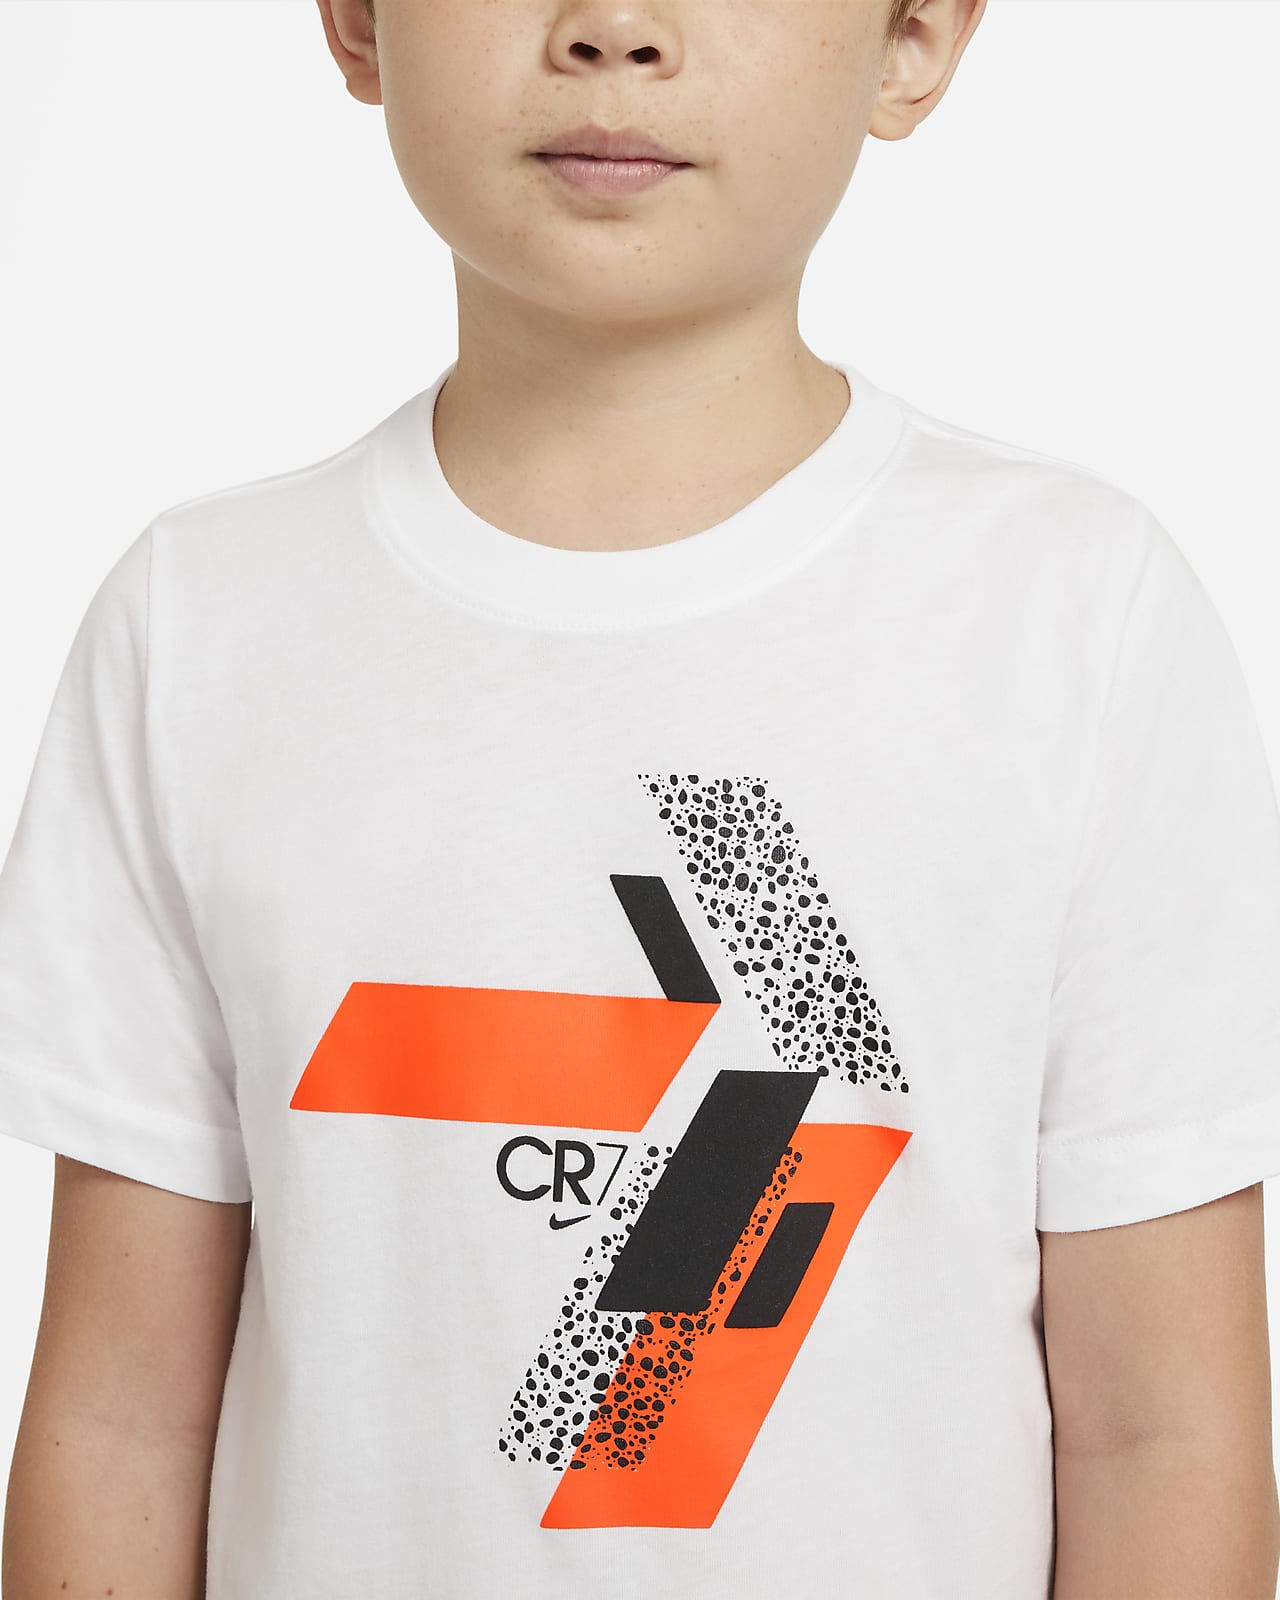 cr7 t shirt india